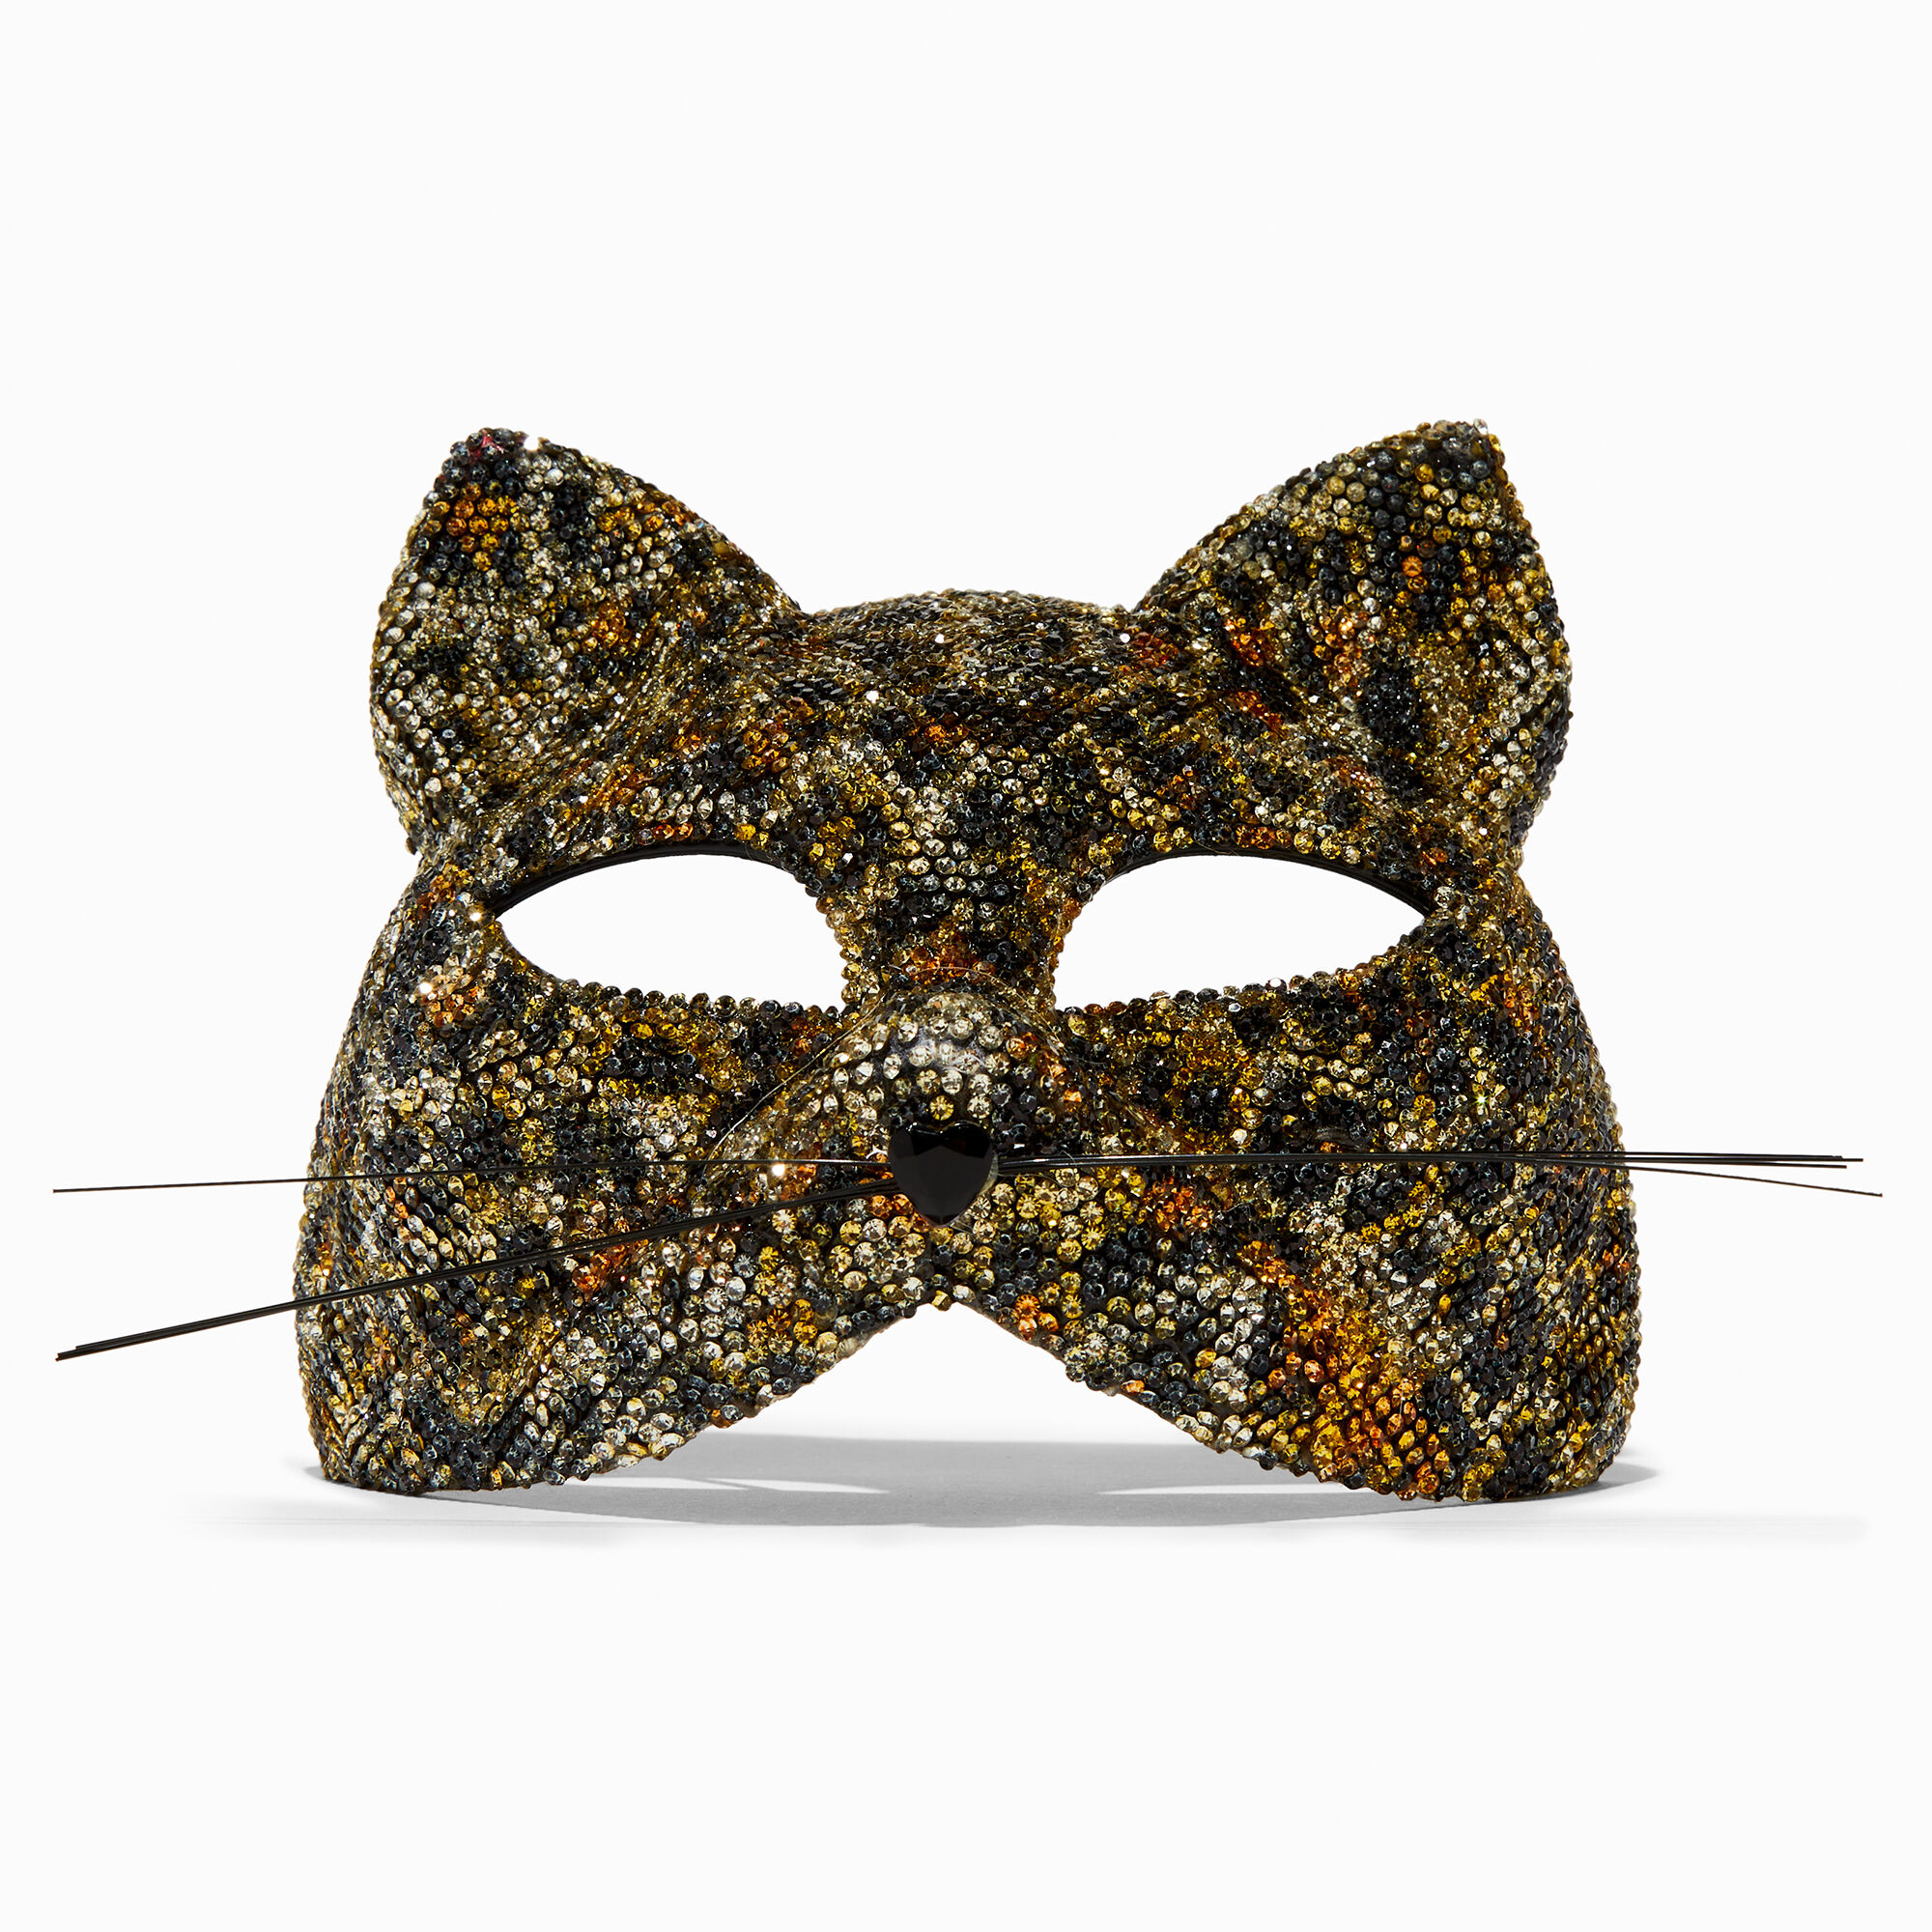 View Claires Embellished Leopard Mask information